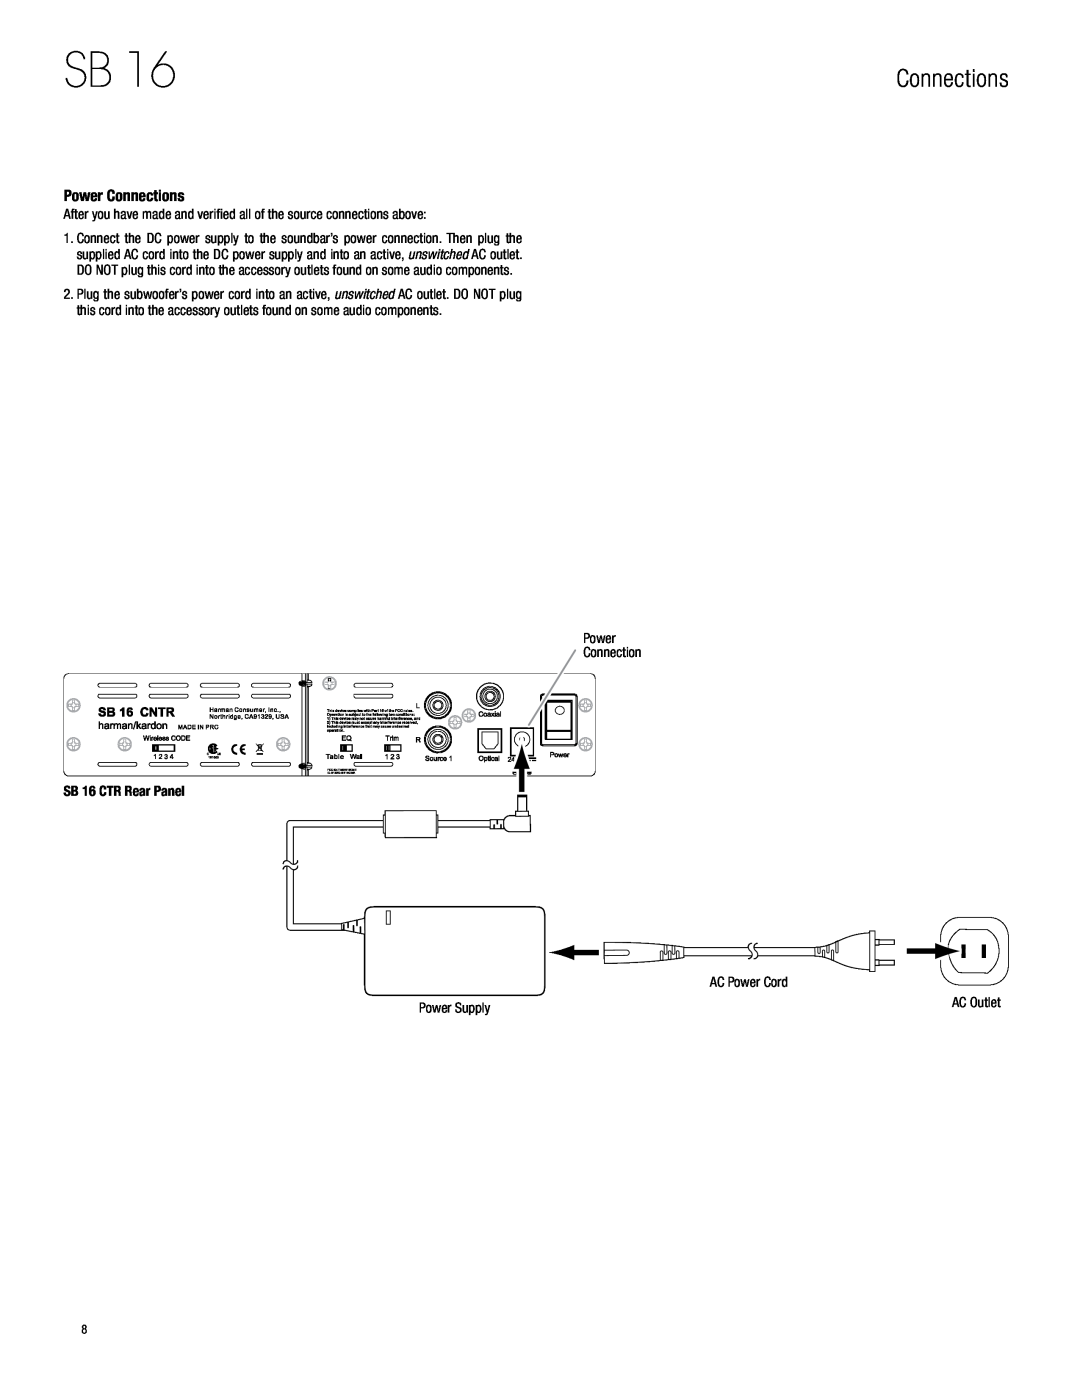 Harman-Kardon owner manual Power Connections, SB 16 CTR Rear Panel 